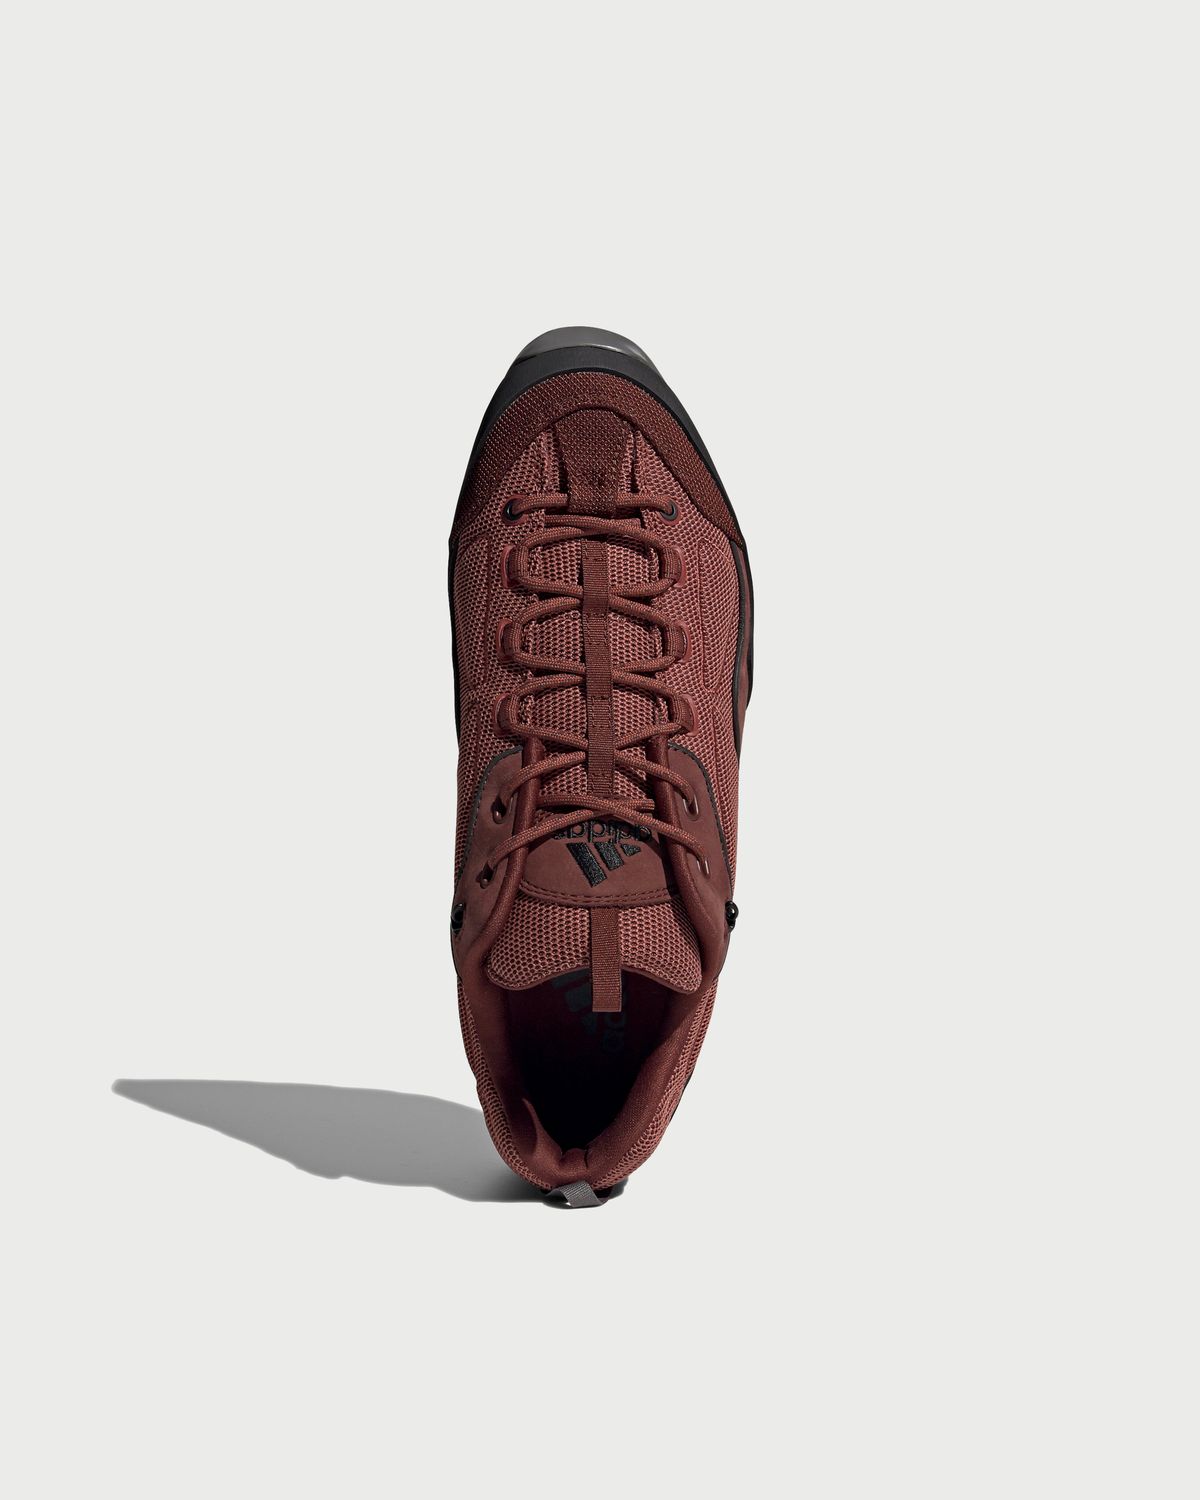 Adidas – Sahalex Brown - Low Top Sneakers - Brown - Image 3